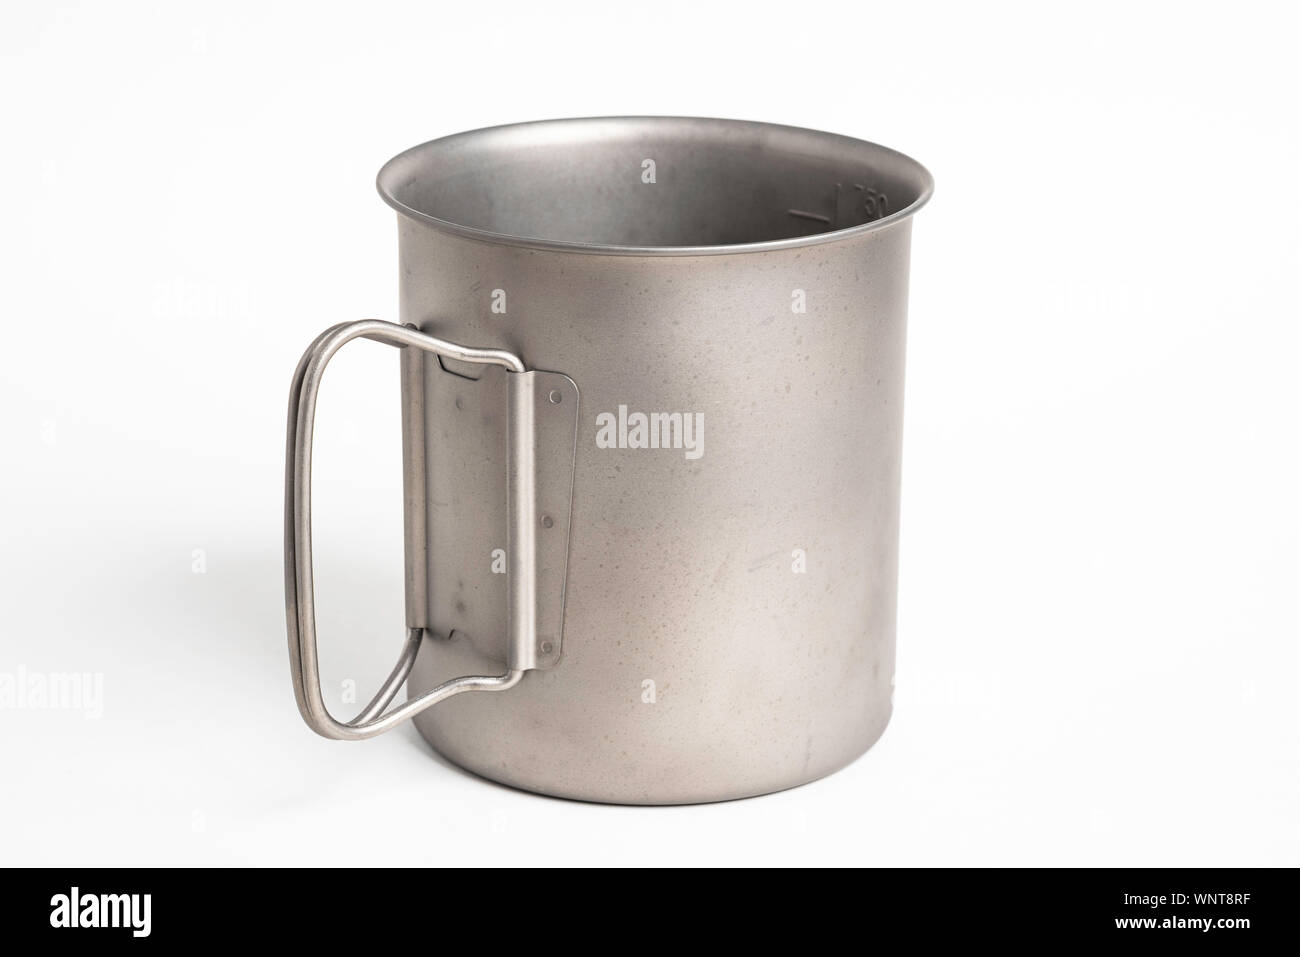 https://c8.alamy.com/comp/WNT8RF/an-all-metal-multiple-purpose-mug-with-flexible-handle-and-measuring-mark-set-on-a-plain-white-background-WNT8RF.jpg